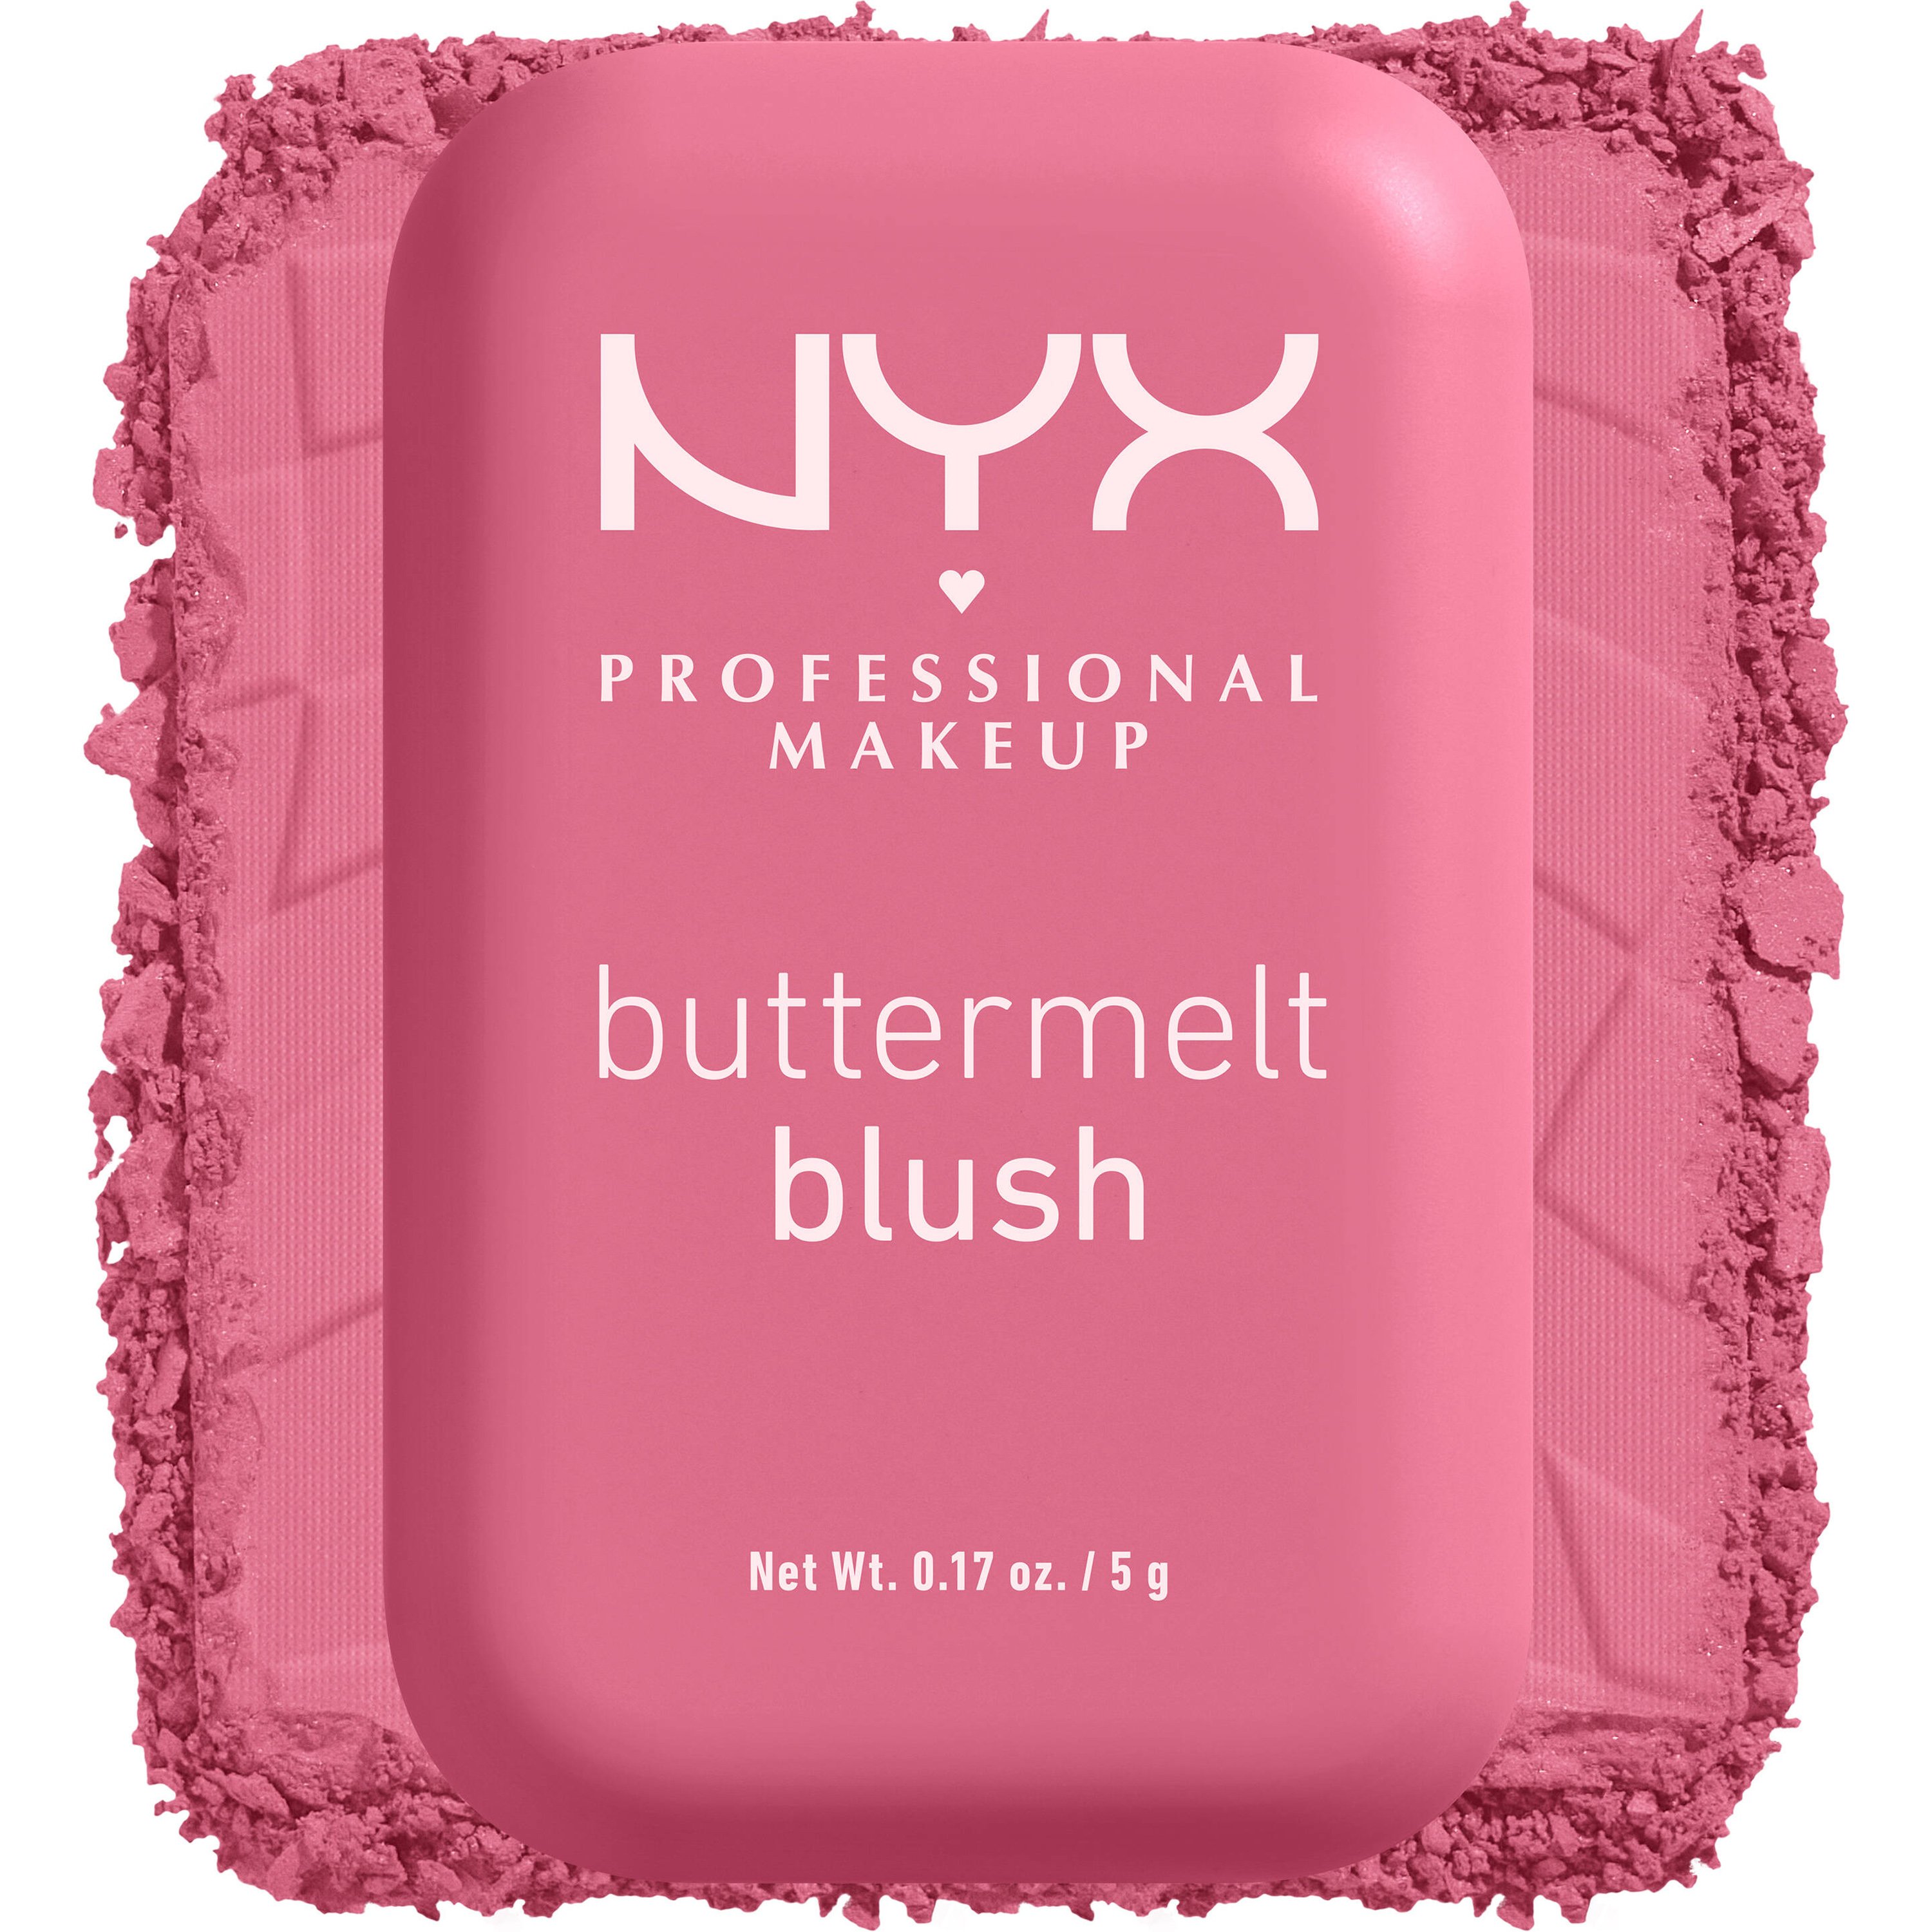 Nyx Professional Makeup Buttermelt Blush Ρουζ με Έντονο Χρώμα Soft Mauve 5g - For the Butta